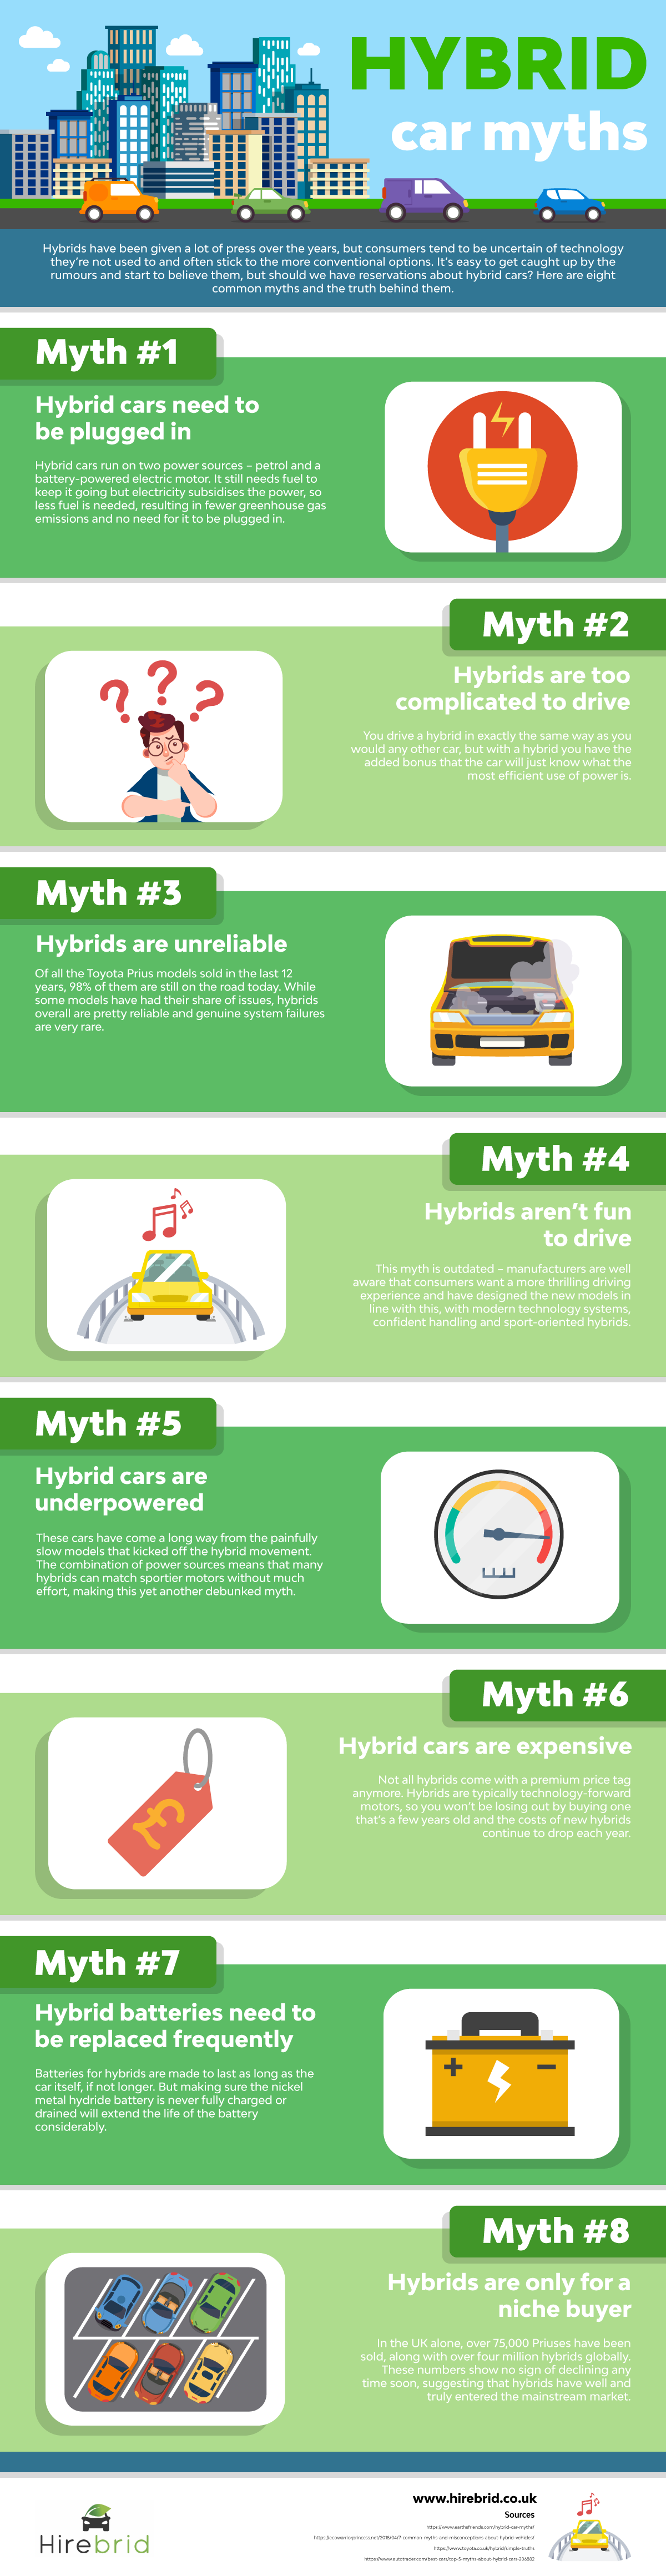 hybrid car myths - infographic